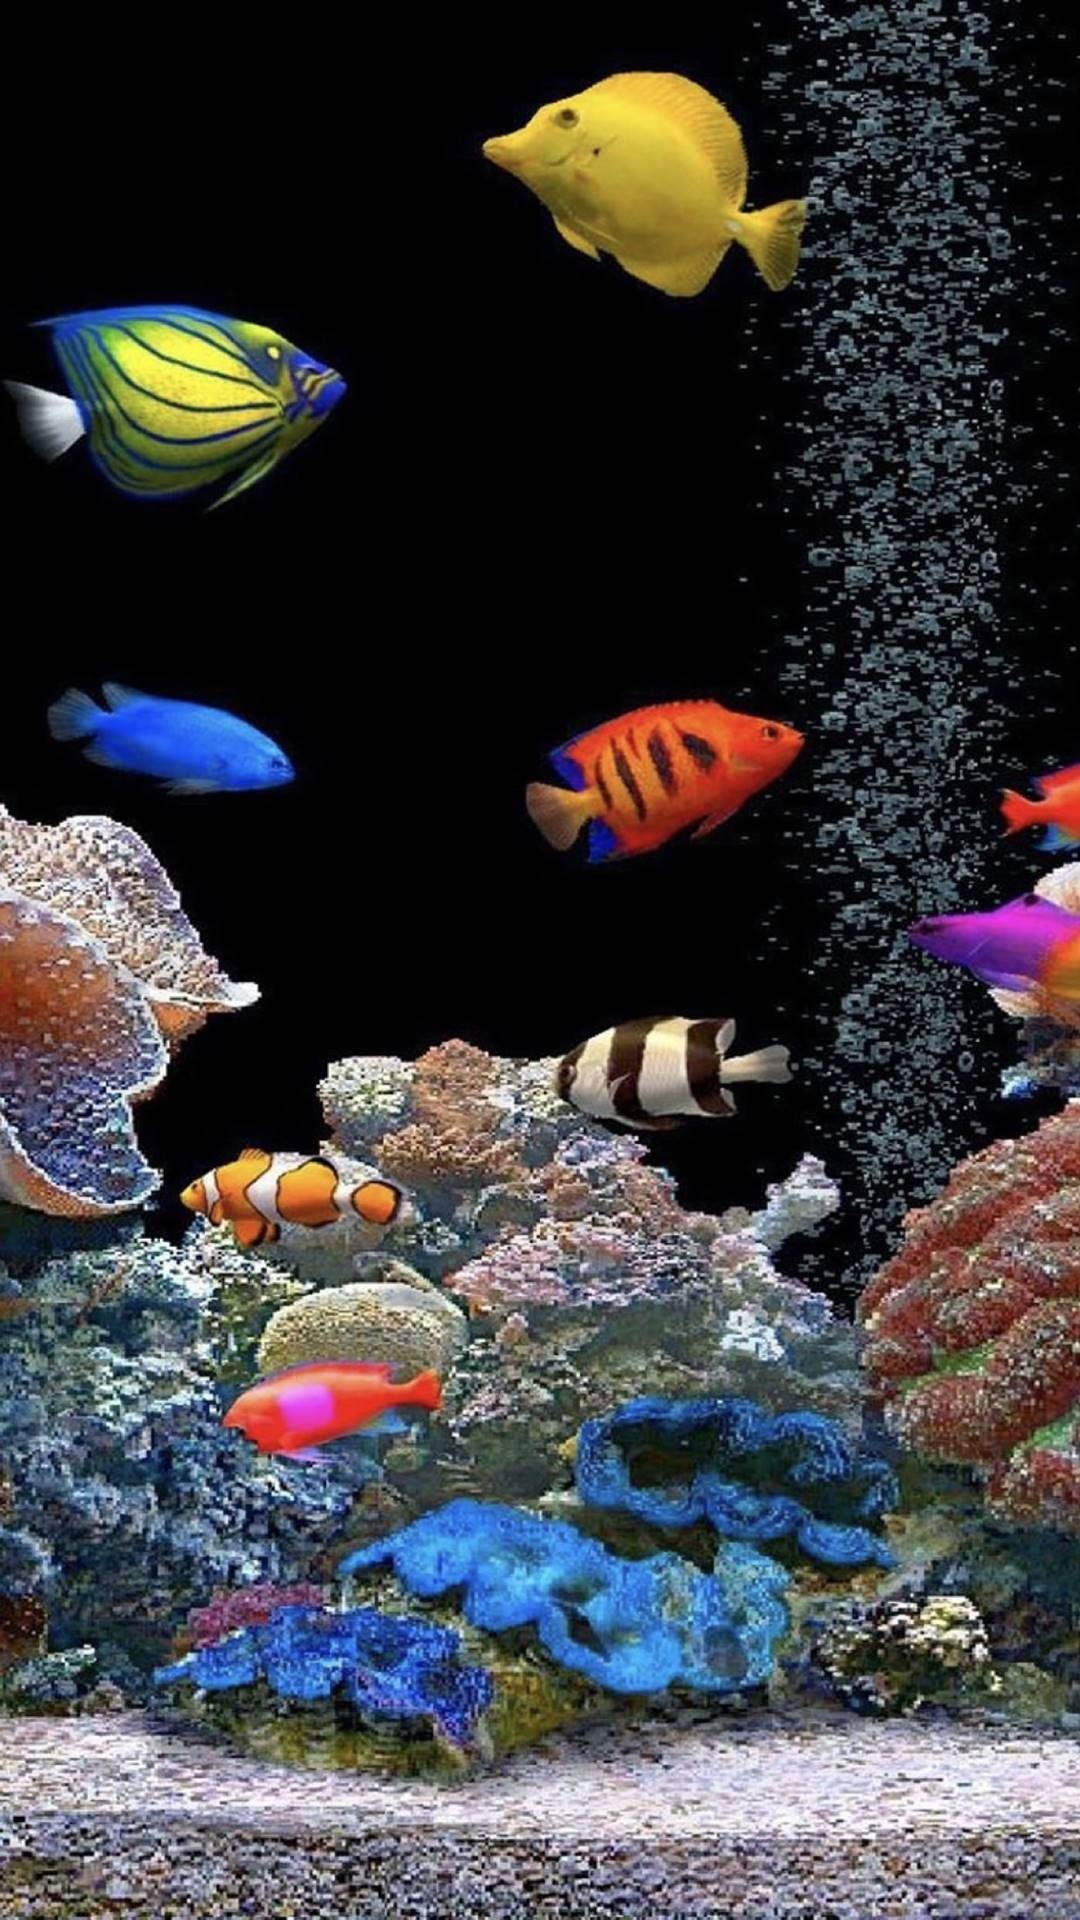 Aquarium screensaver, Relaxing underwater visuals, Serene atmosphere, Tranquil aquatic experience, Nature's calm, 1080x1920 Full HD Handy